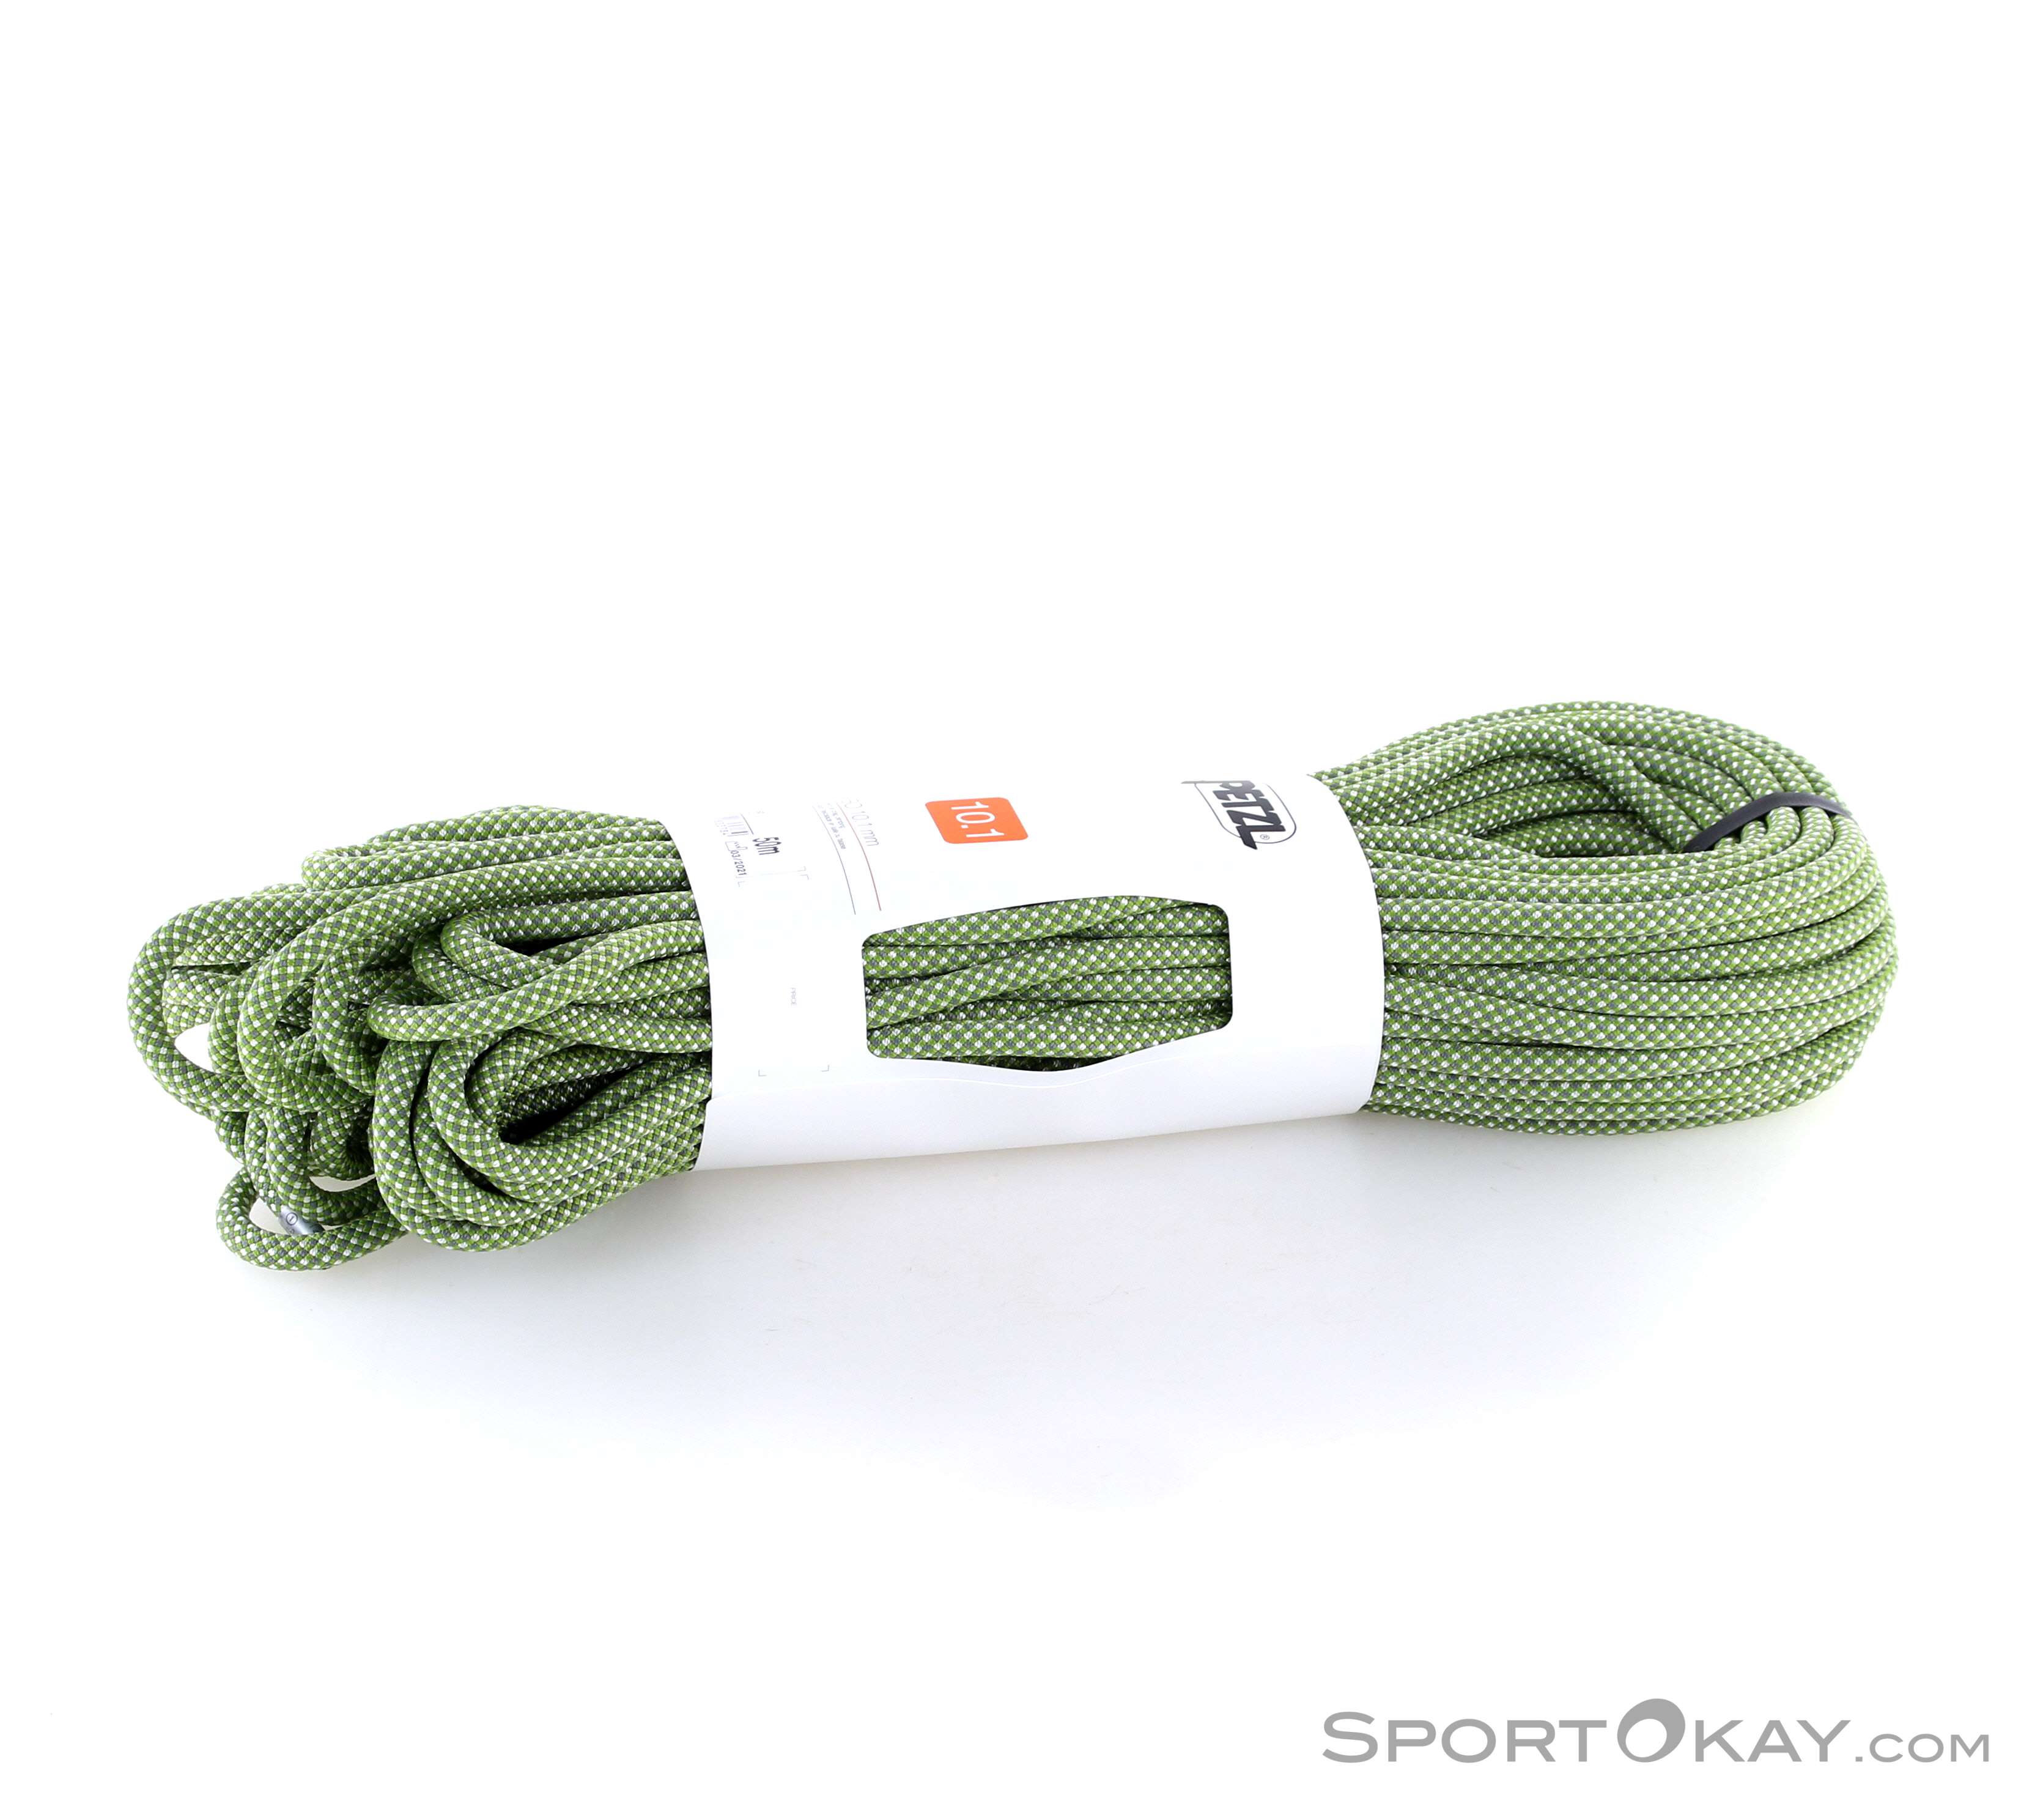 Petzl, Mambo, 10.1 Mm Diameter Single Rope For Gym Or Rock Climbing, Green,  50 M イベント、販促用